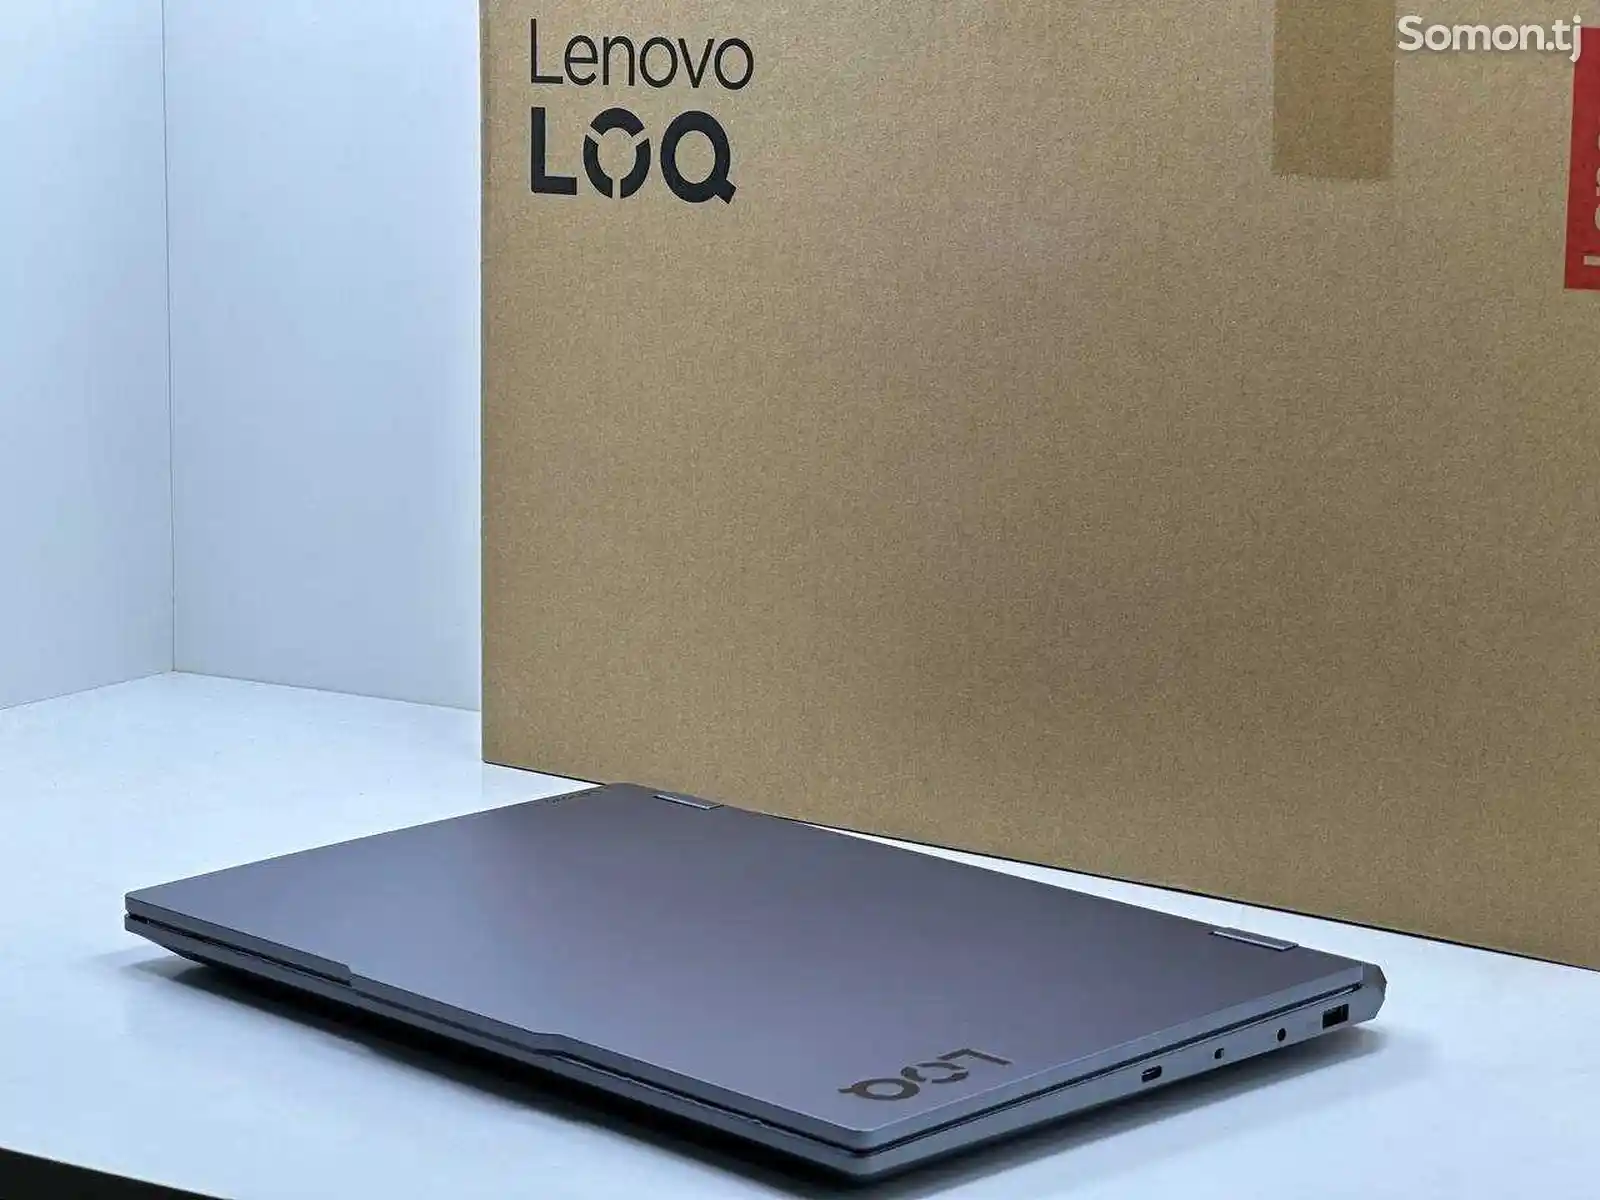 Ноутбук Lenovo Loq Irx9-4